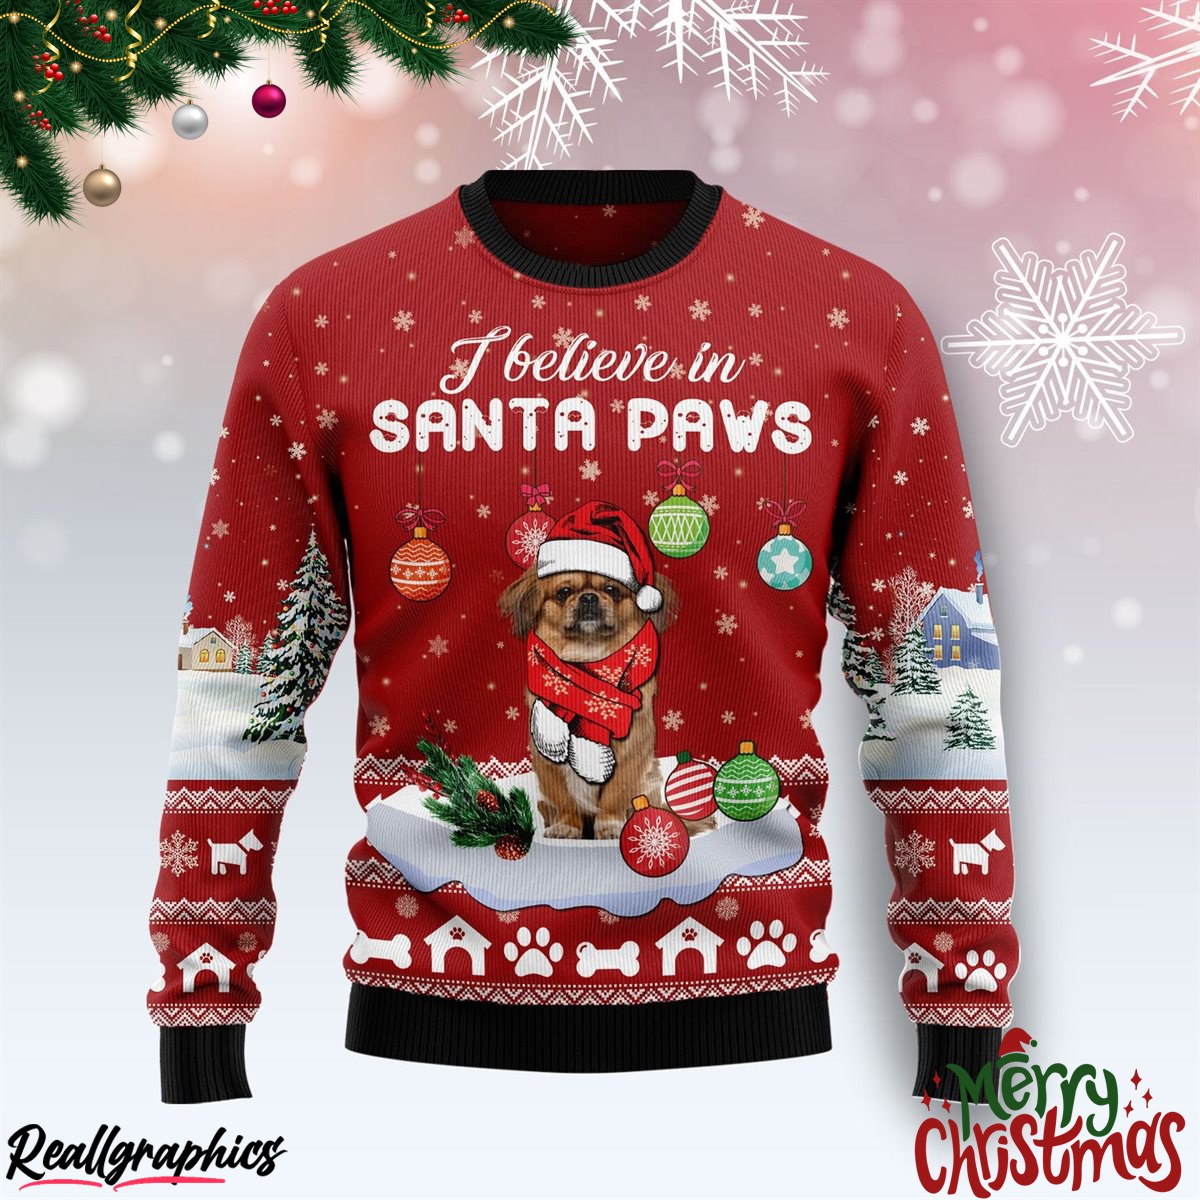 pekingese i believe in santa paws ugly sweatshirt, sweater